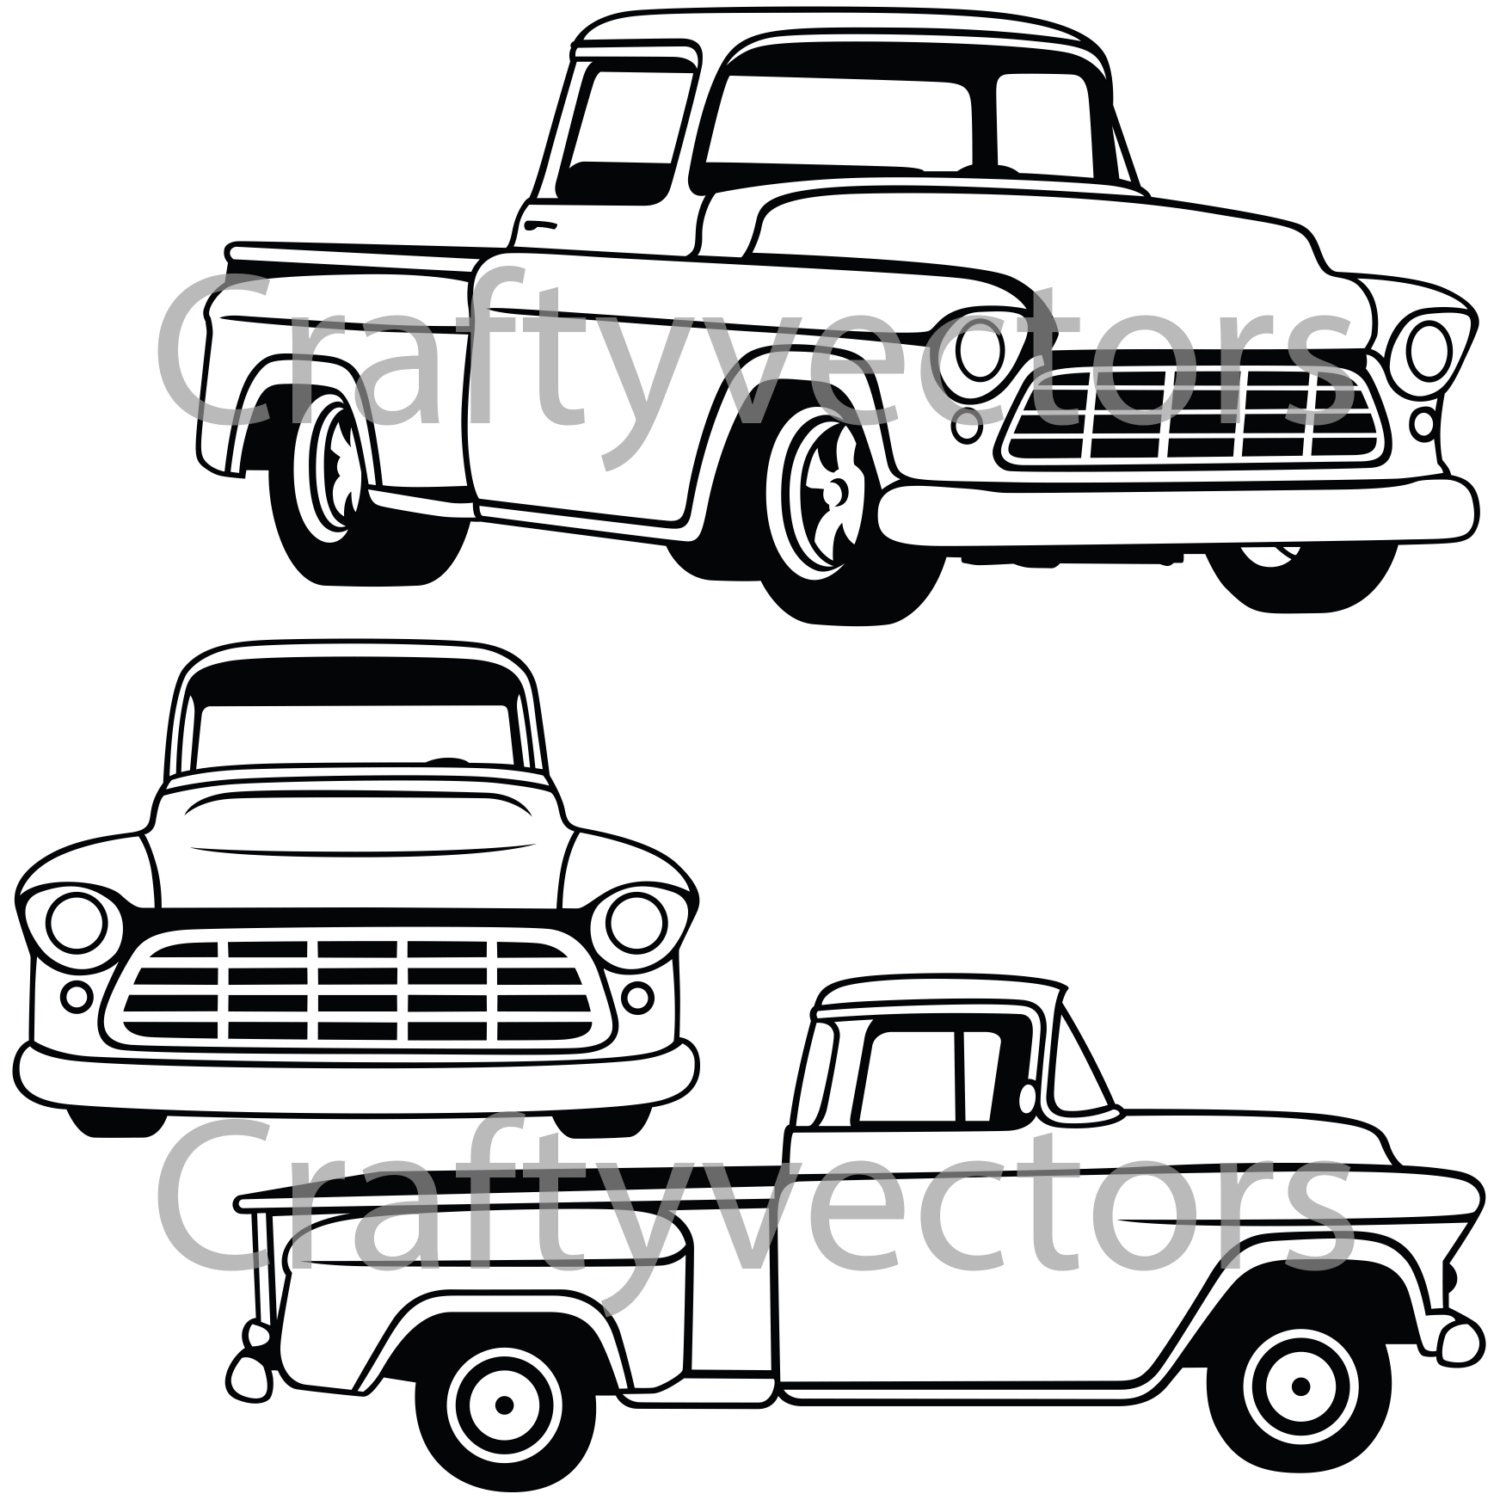 1956 Chevrolet Truck Vector File